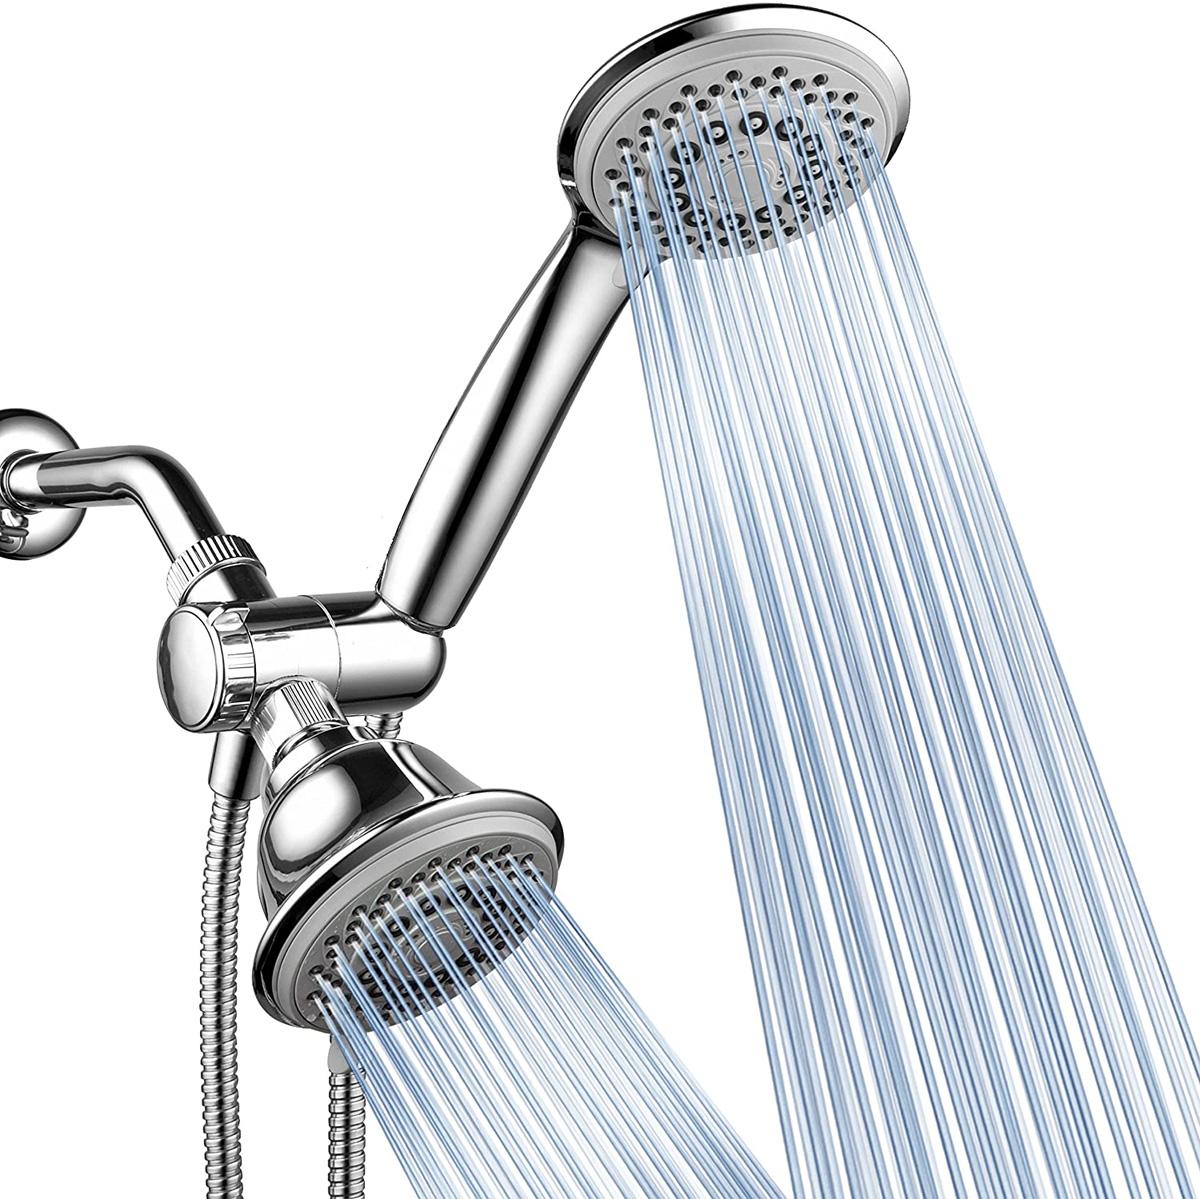 AquaStorm by HotelSpa 30-Setting SpiralFlo 3-Way Luxury Shower Head for $19.99